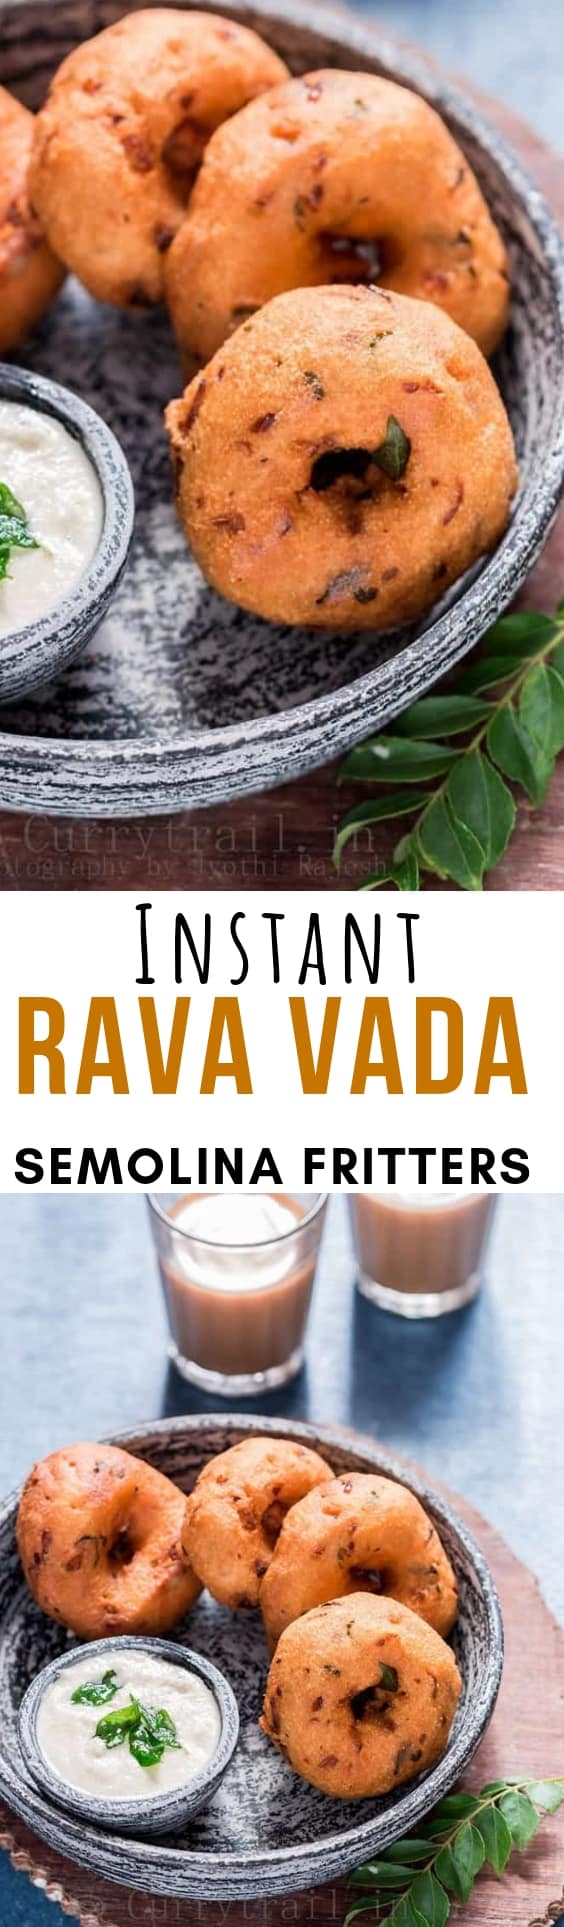 instant rava vada recipe with text overlay